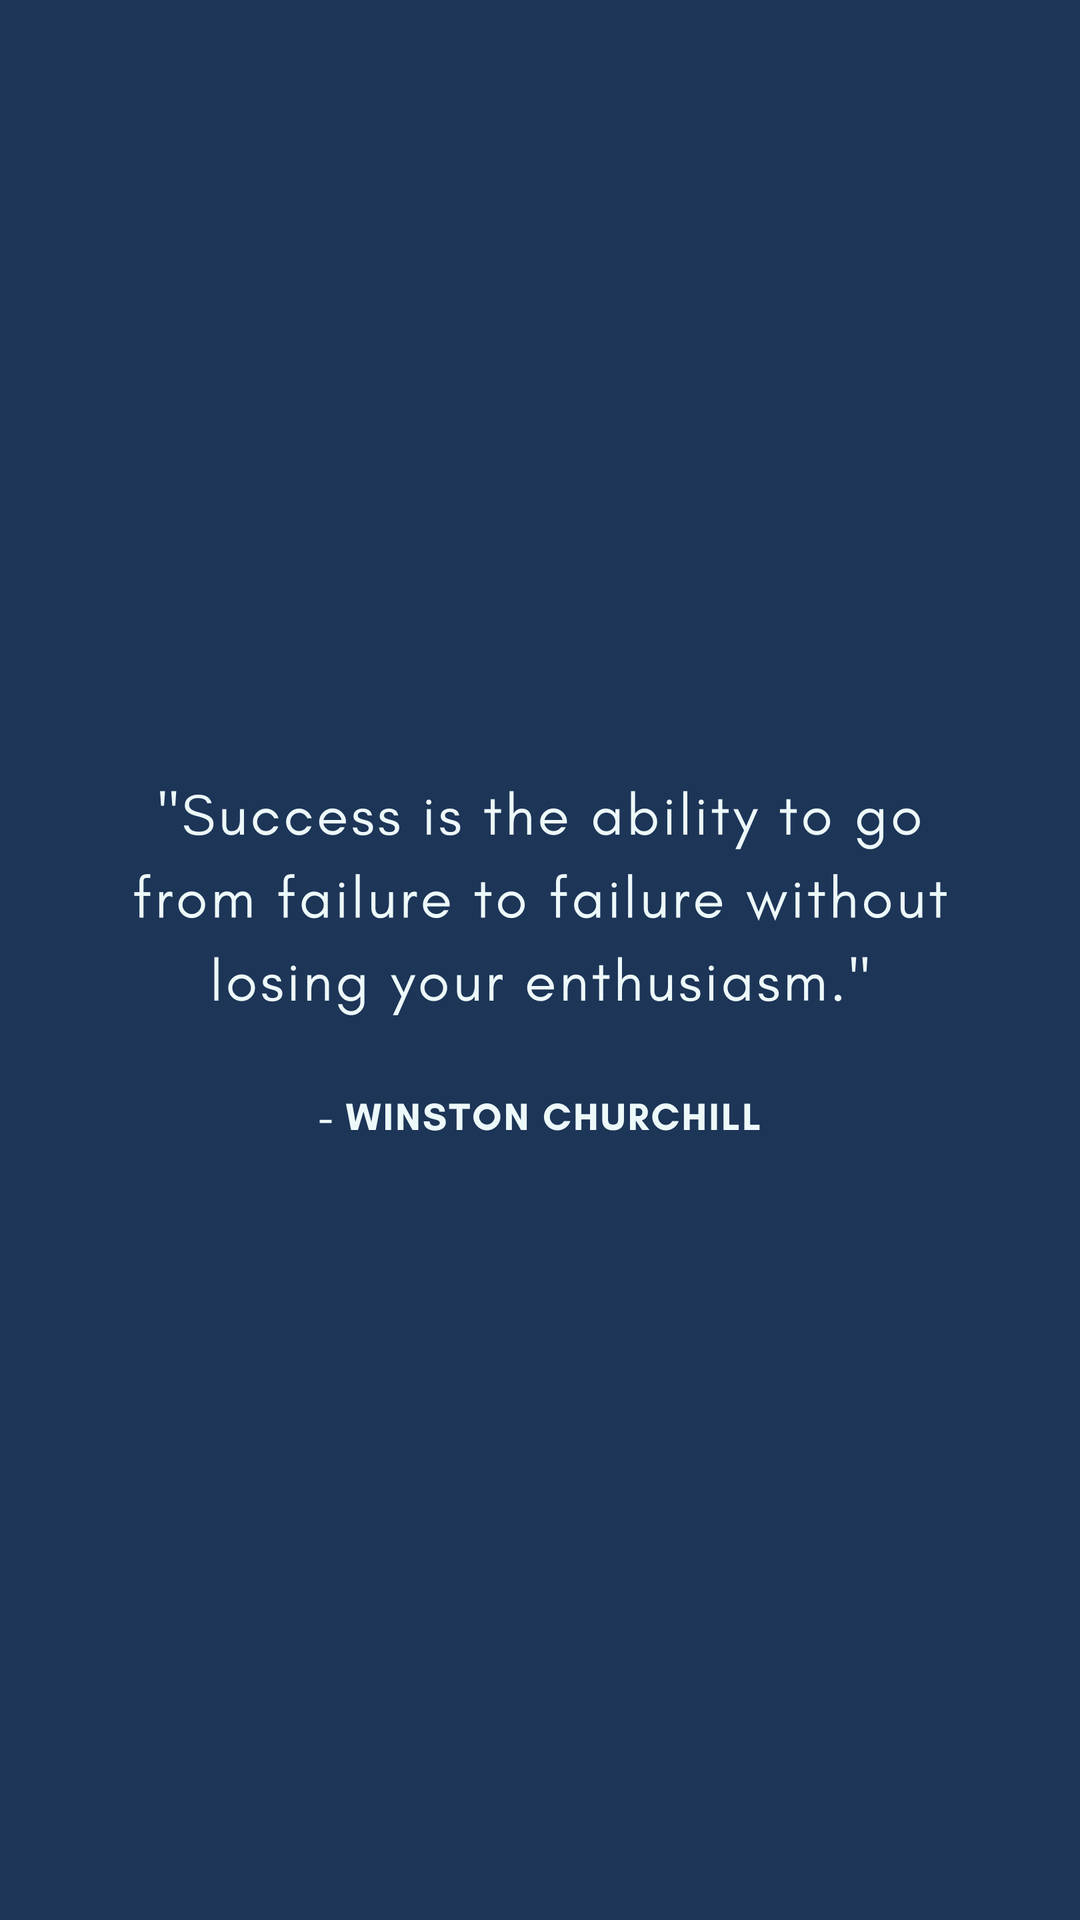 Winston Churchill Quotes Wallpaper